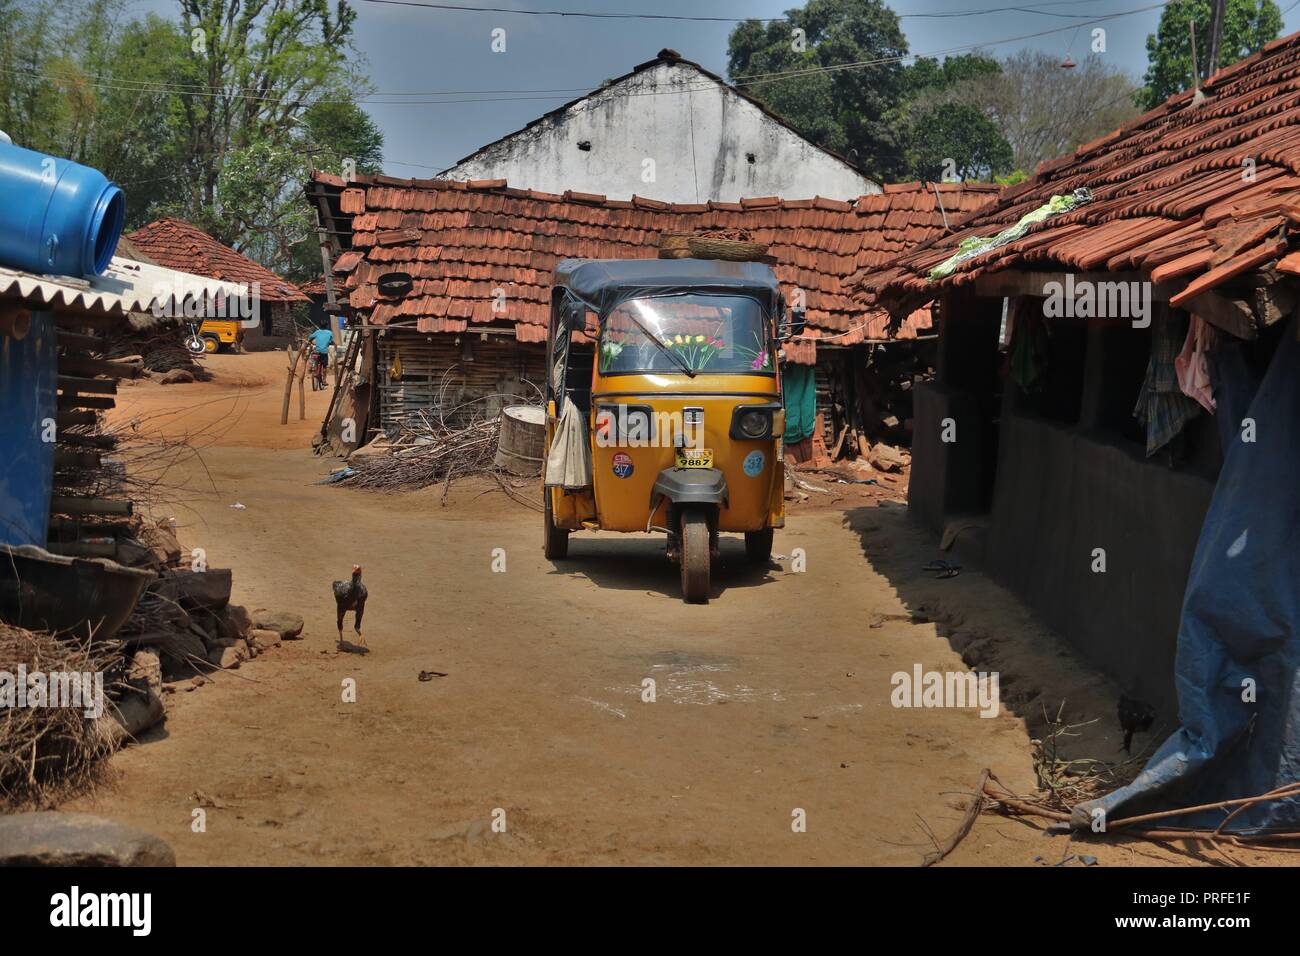 Poor rural area in India Stock Photo